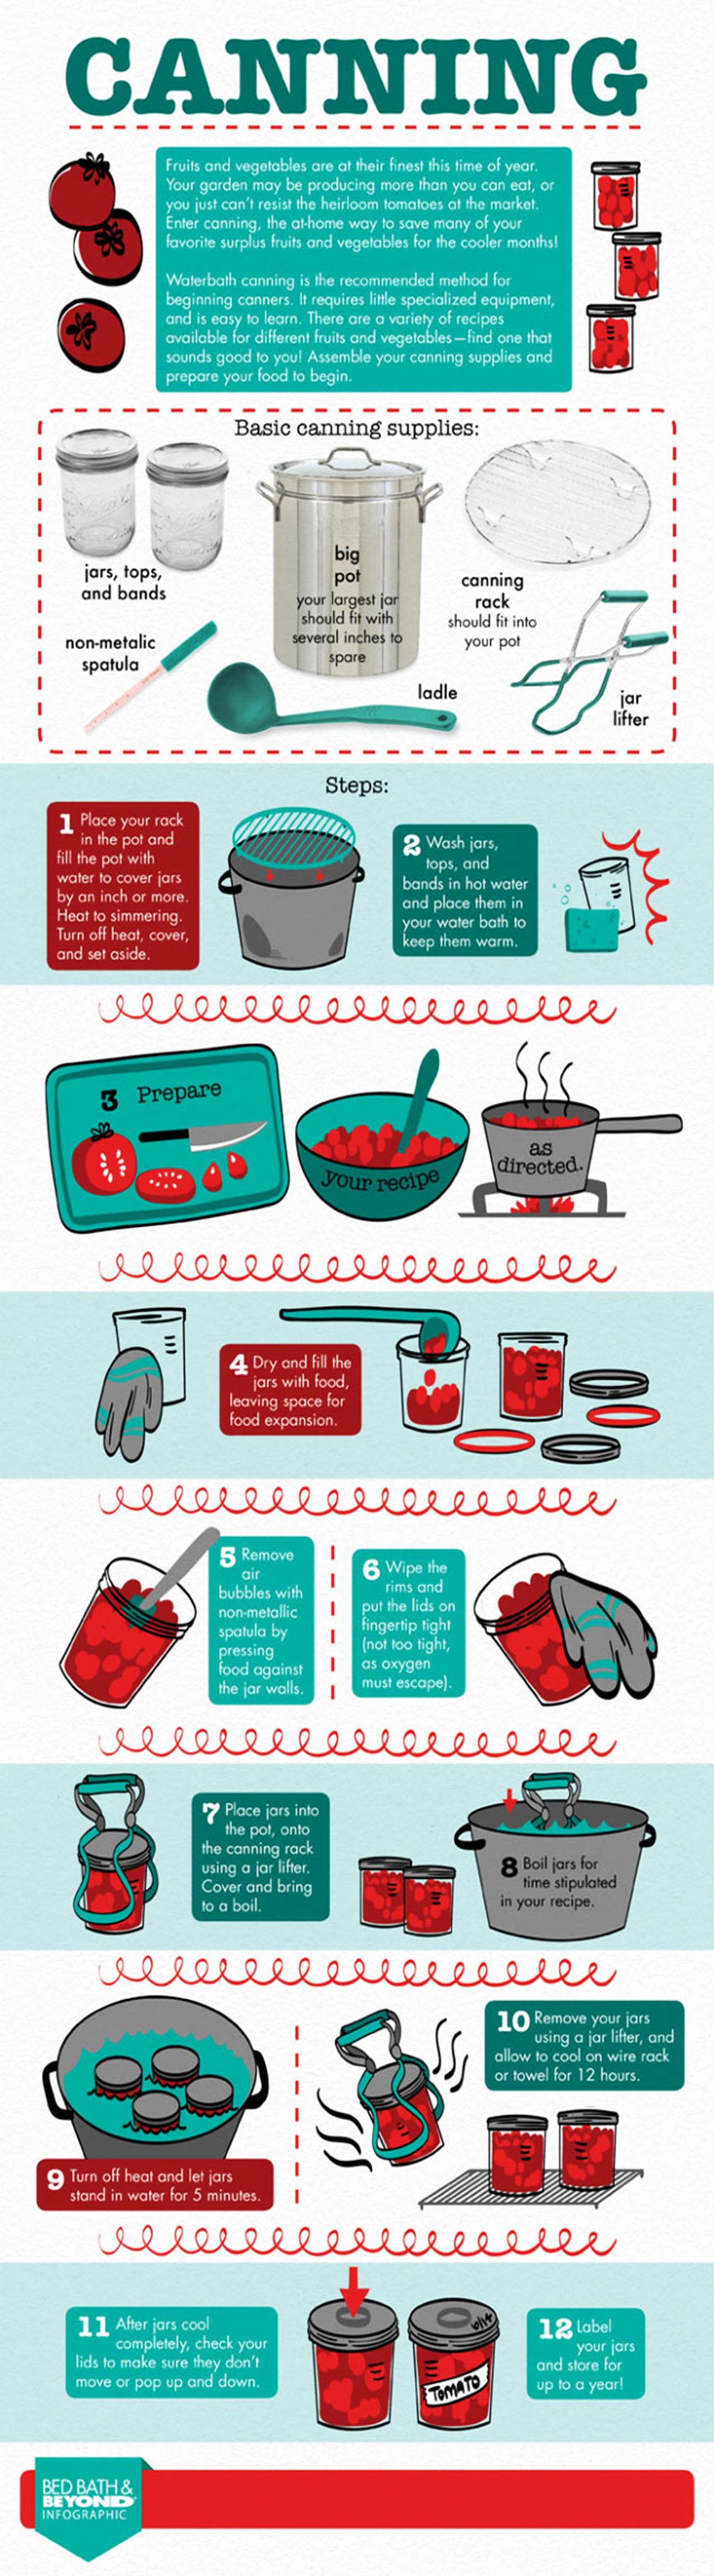 Home Canning Basics